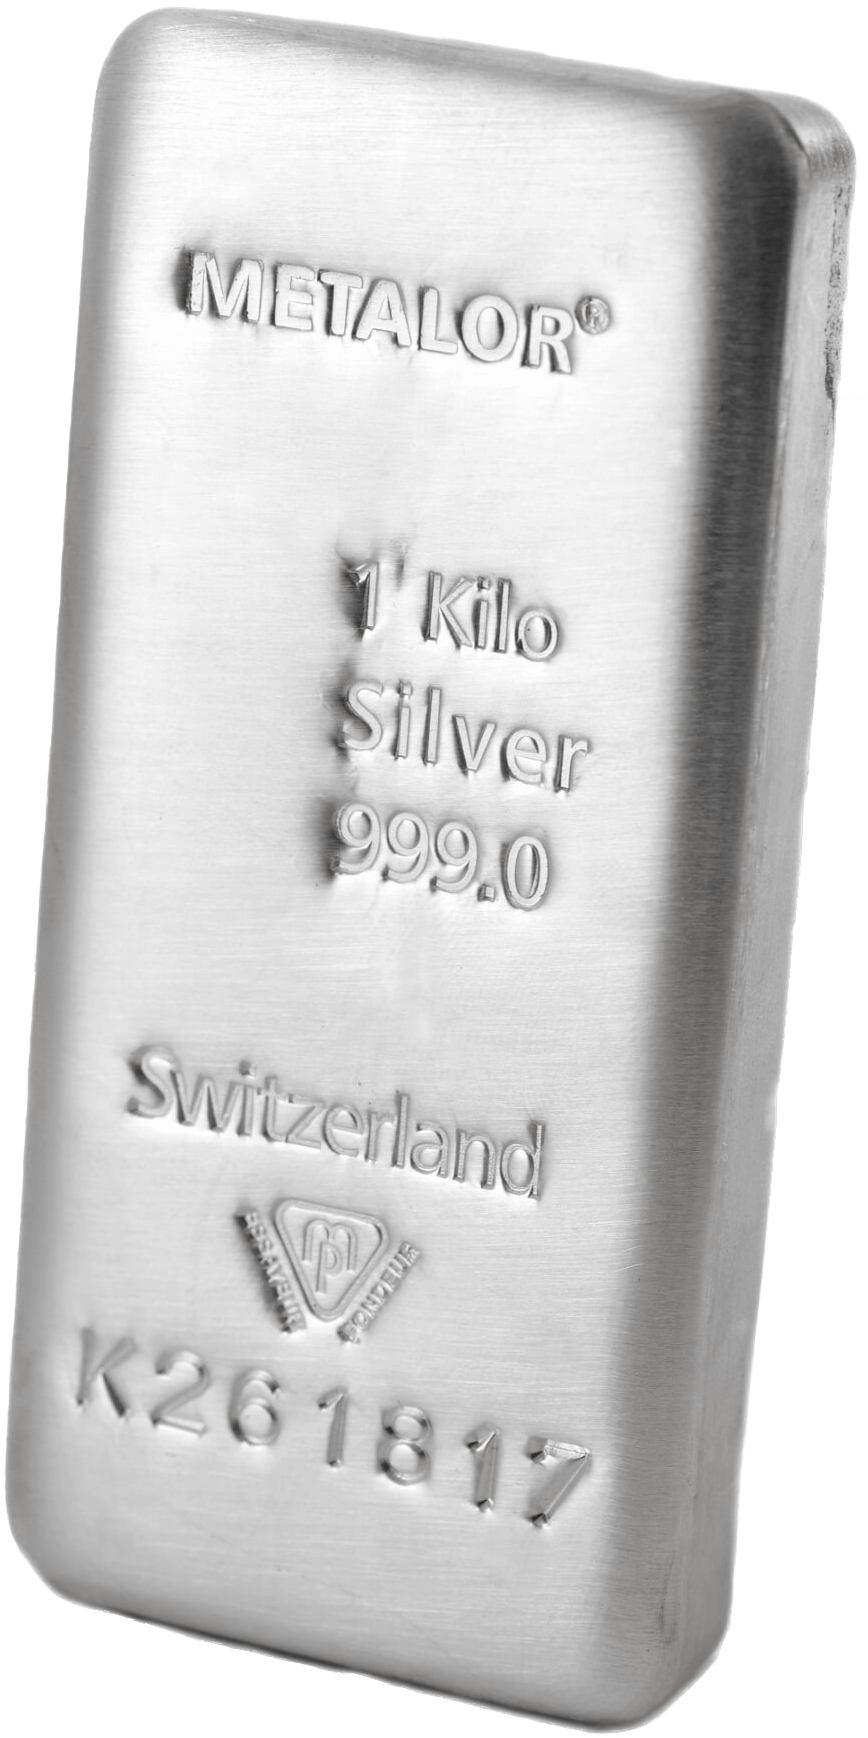 1kg 999 Metalor Silver Bullion Precious Metals Bar